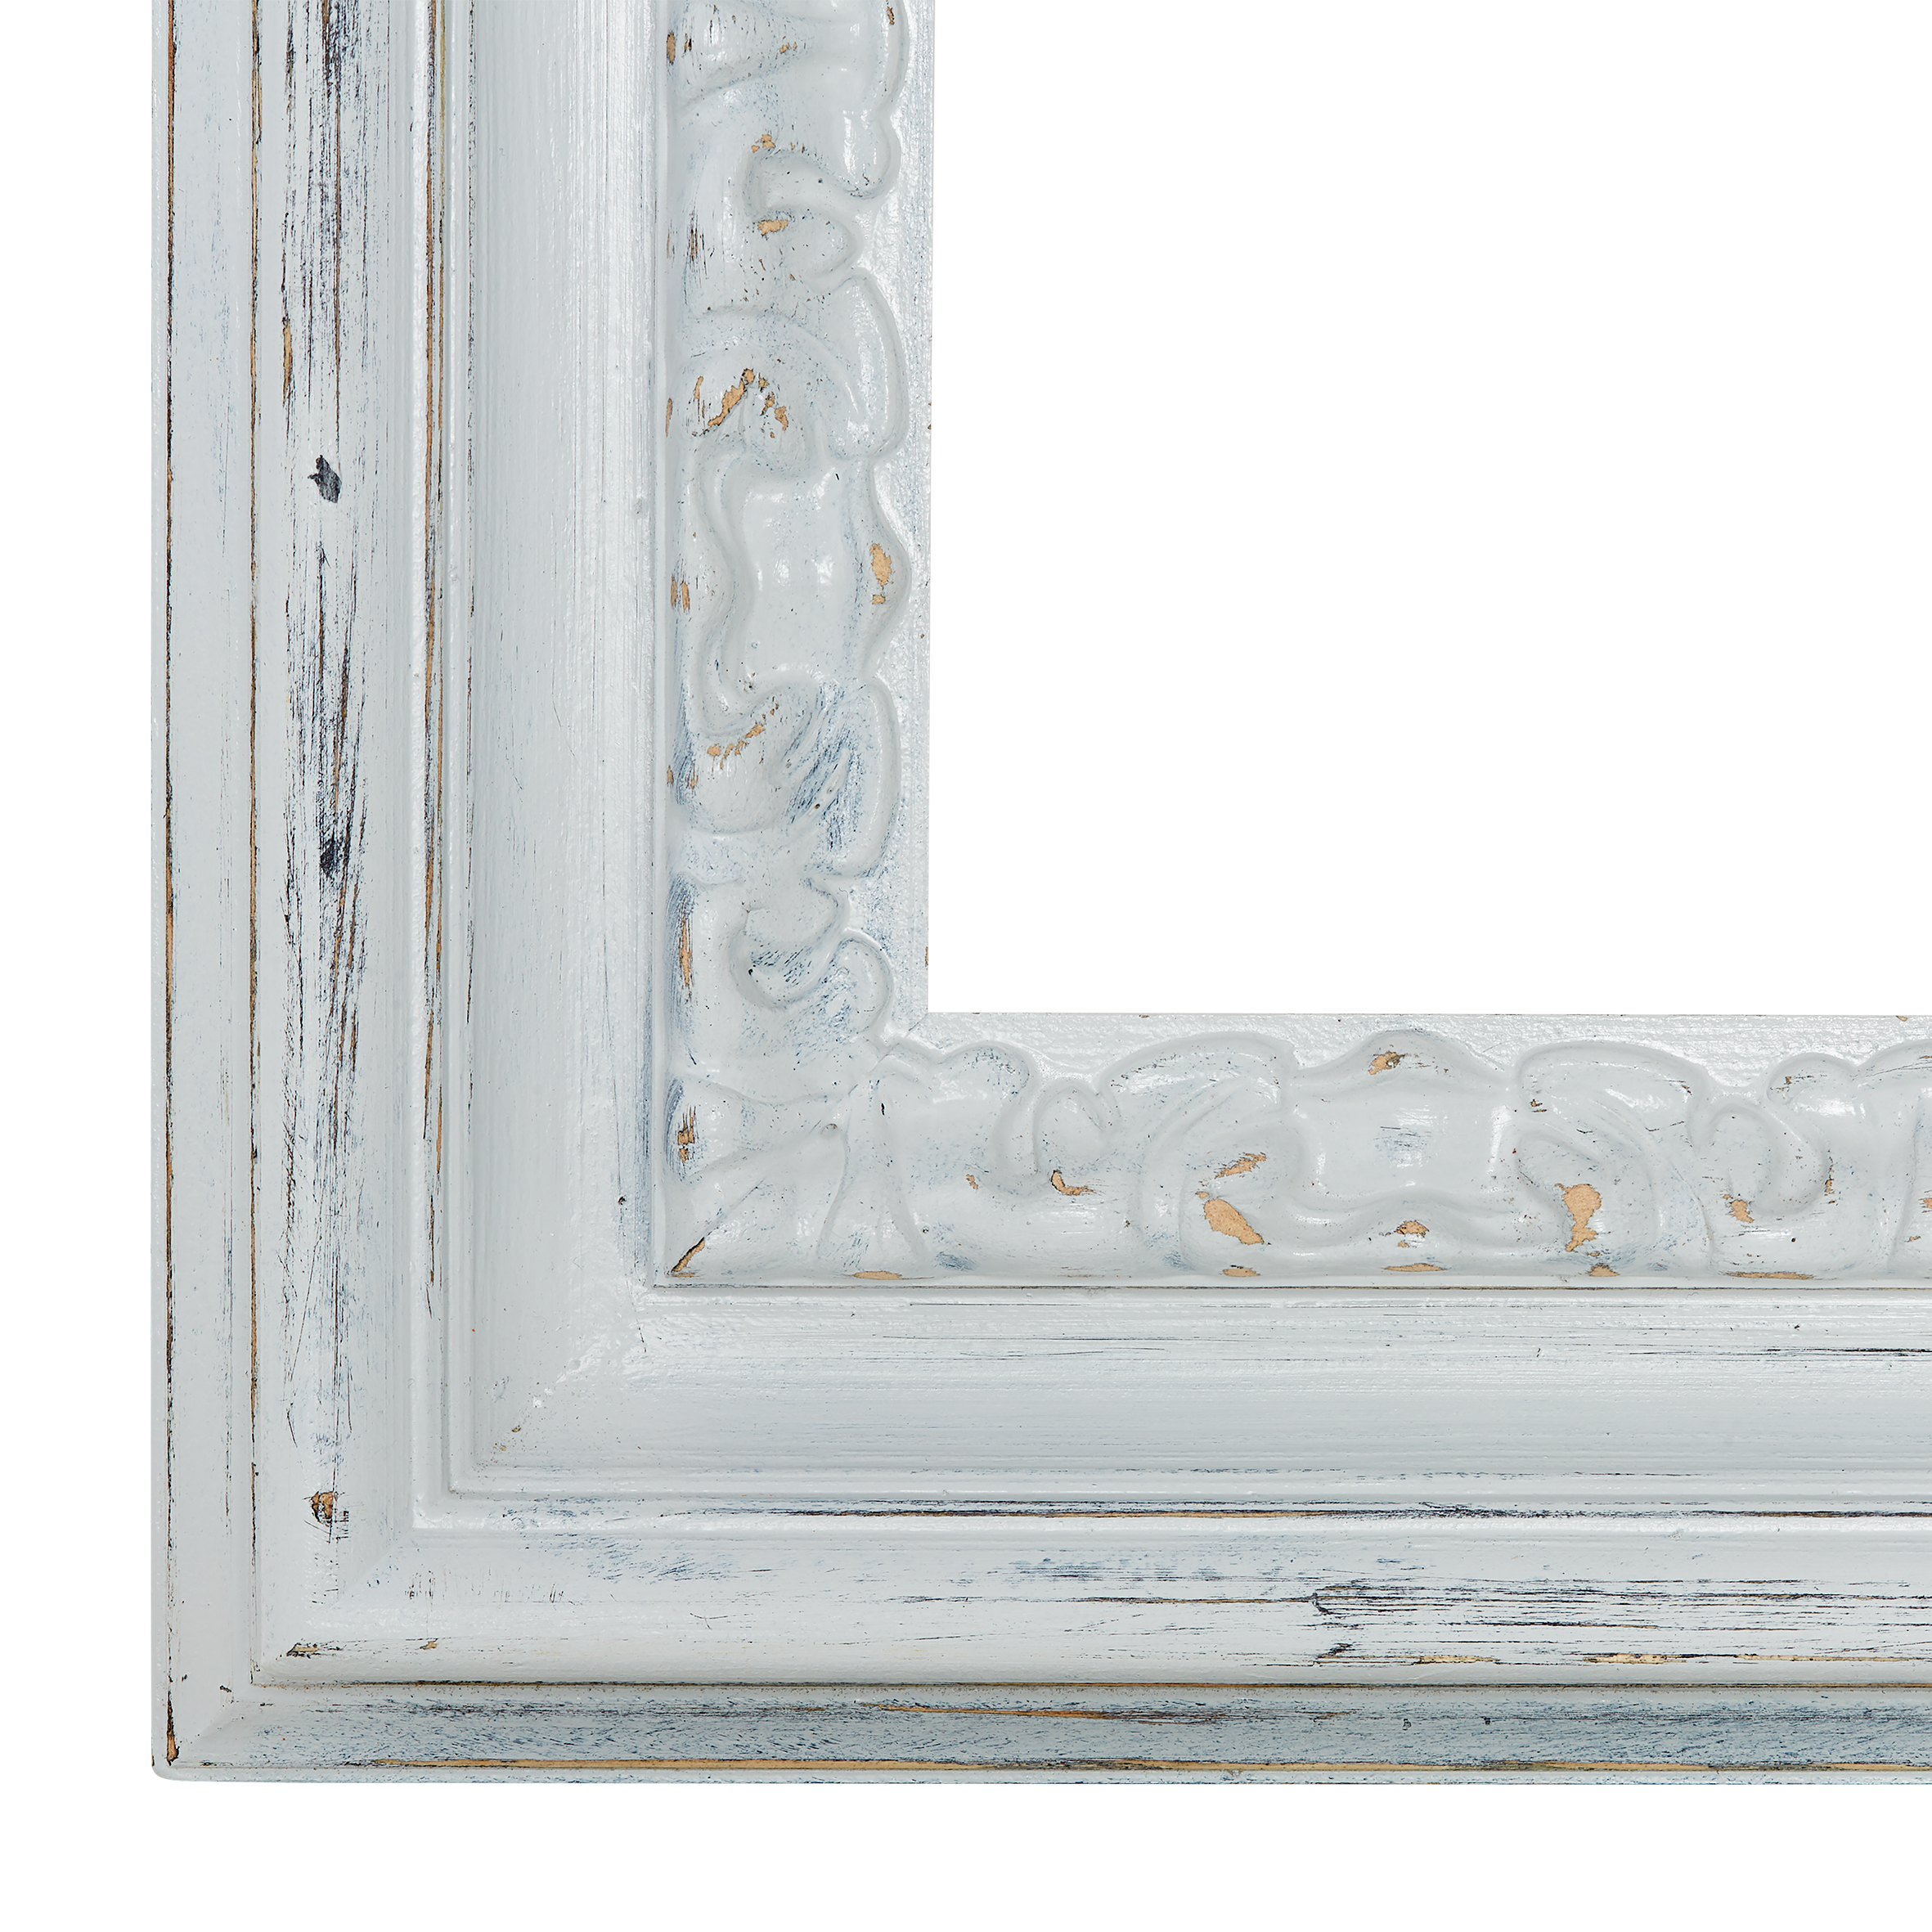 Modell Fionn, rechteckig, Farbe Gold/Weiß, Herstellung: ASR-Rahmendesign Material: Holz Tanne roh m. Ornament, Facettenspiegel, Ecke